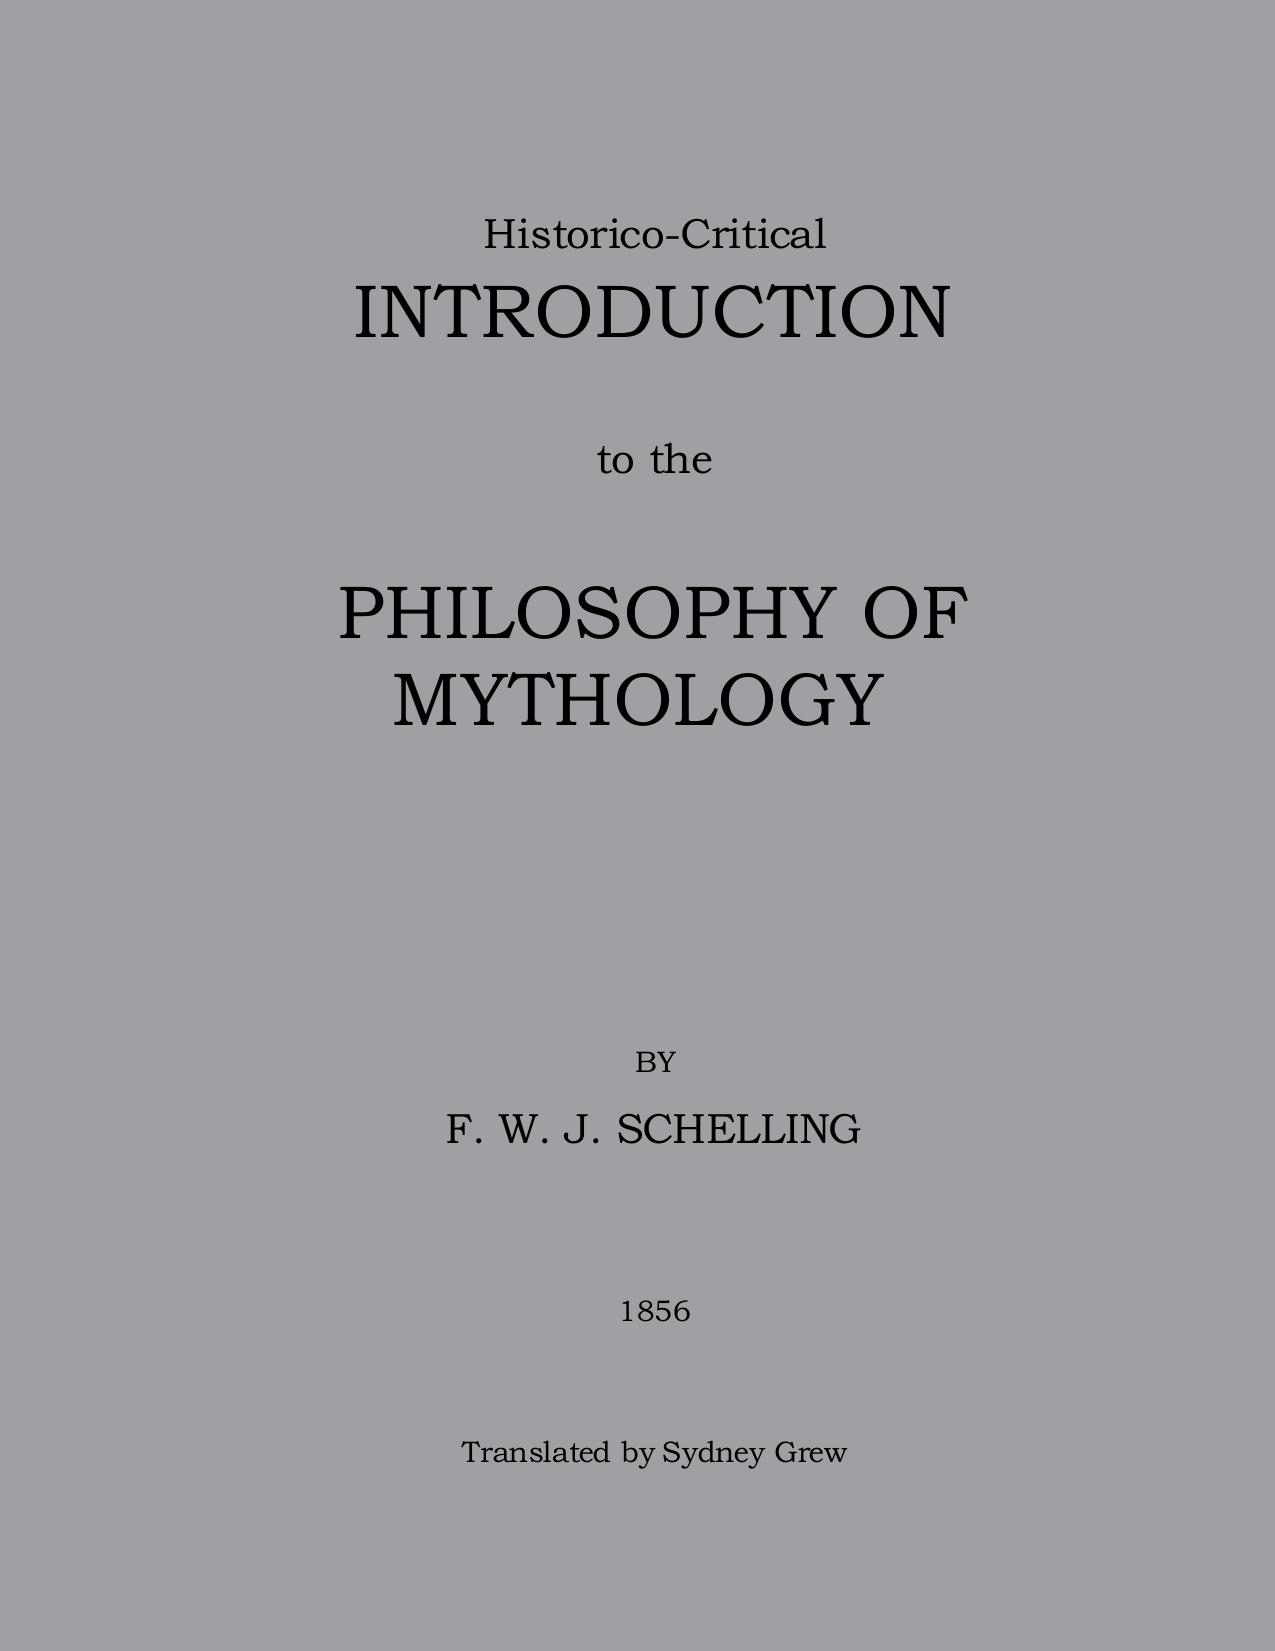 Introduction to the Philosophy of Mythology